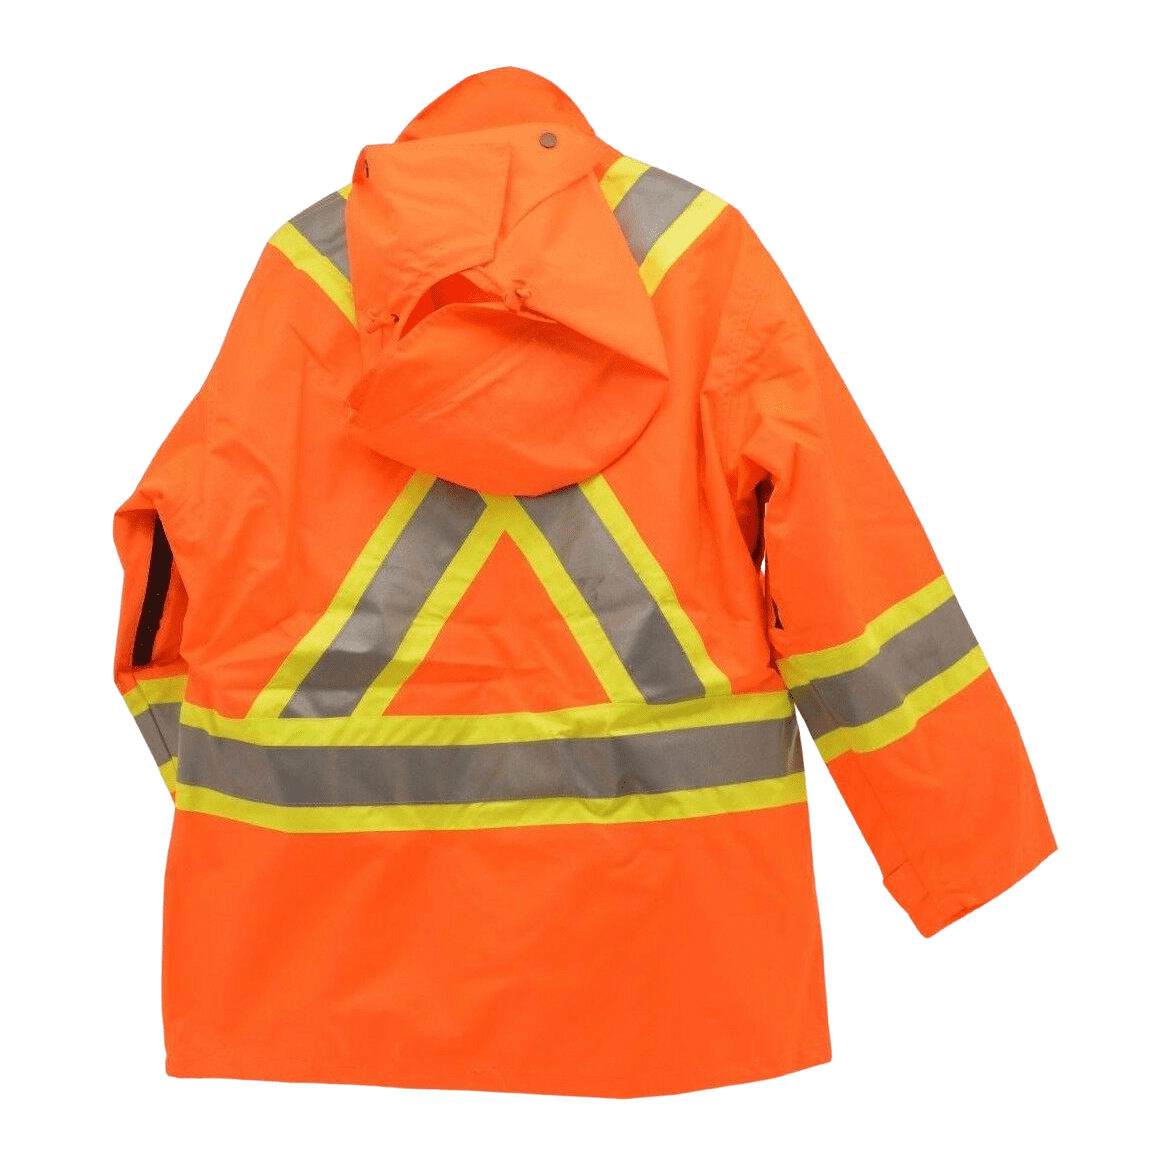 Condor men's 3-in-1 flagmans Safety jacket with removable fleece lining in size medium in high viz orange